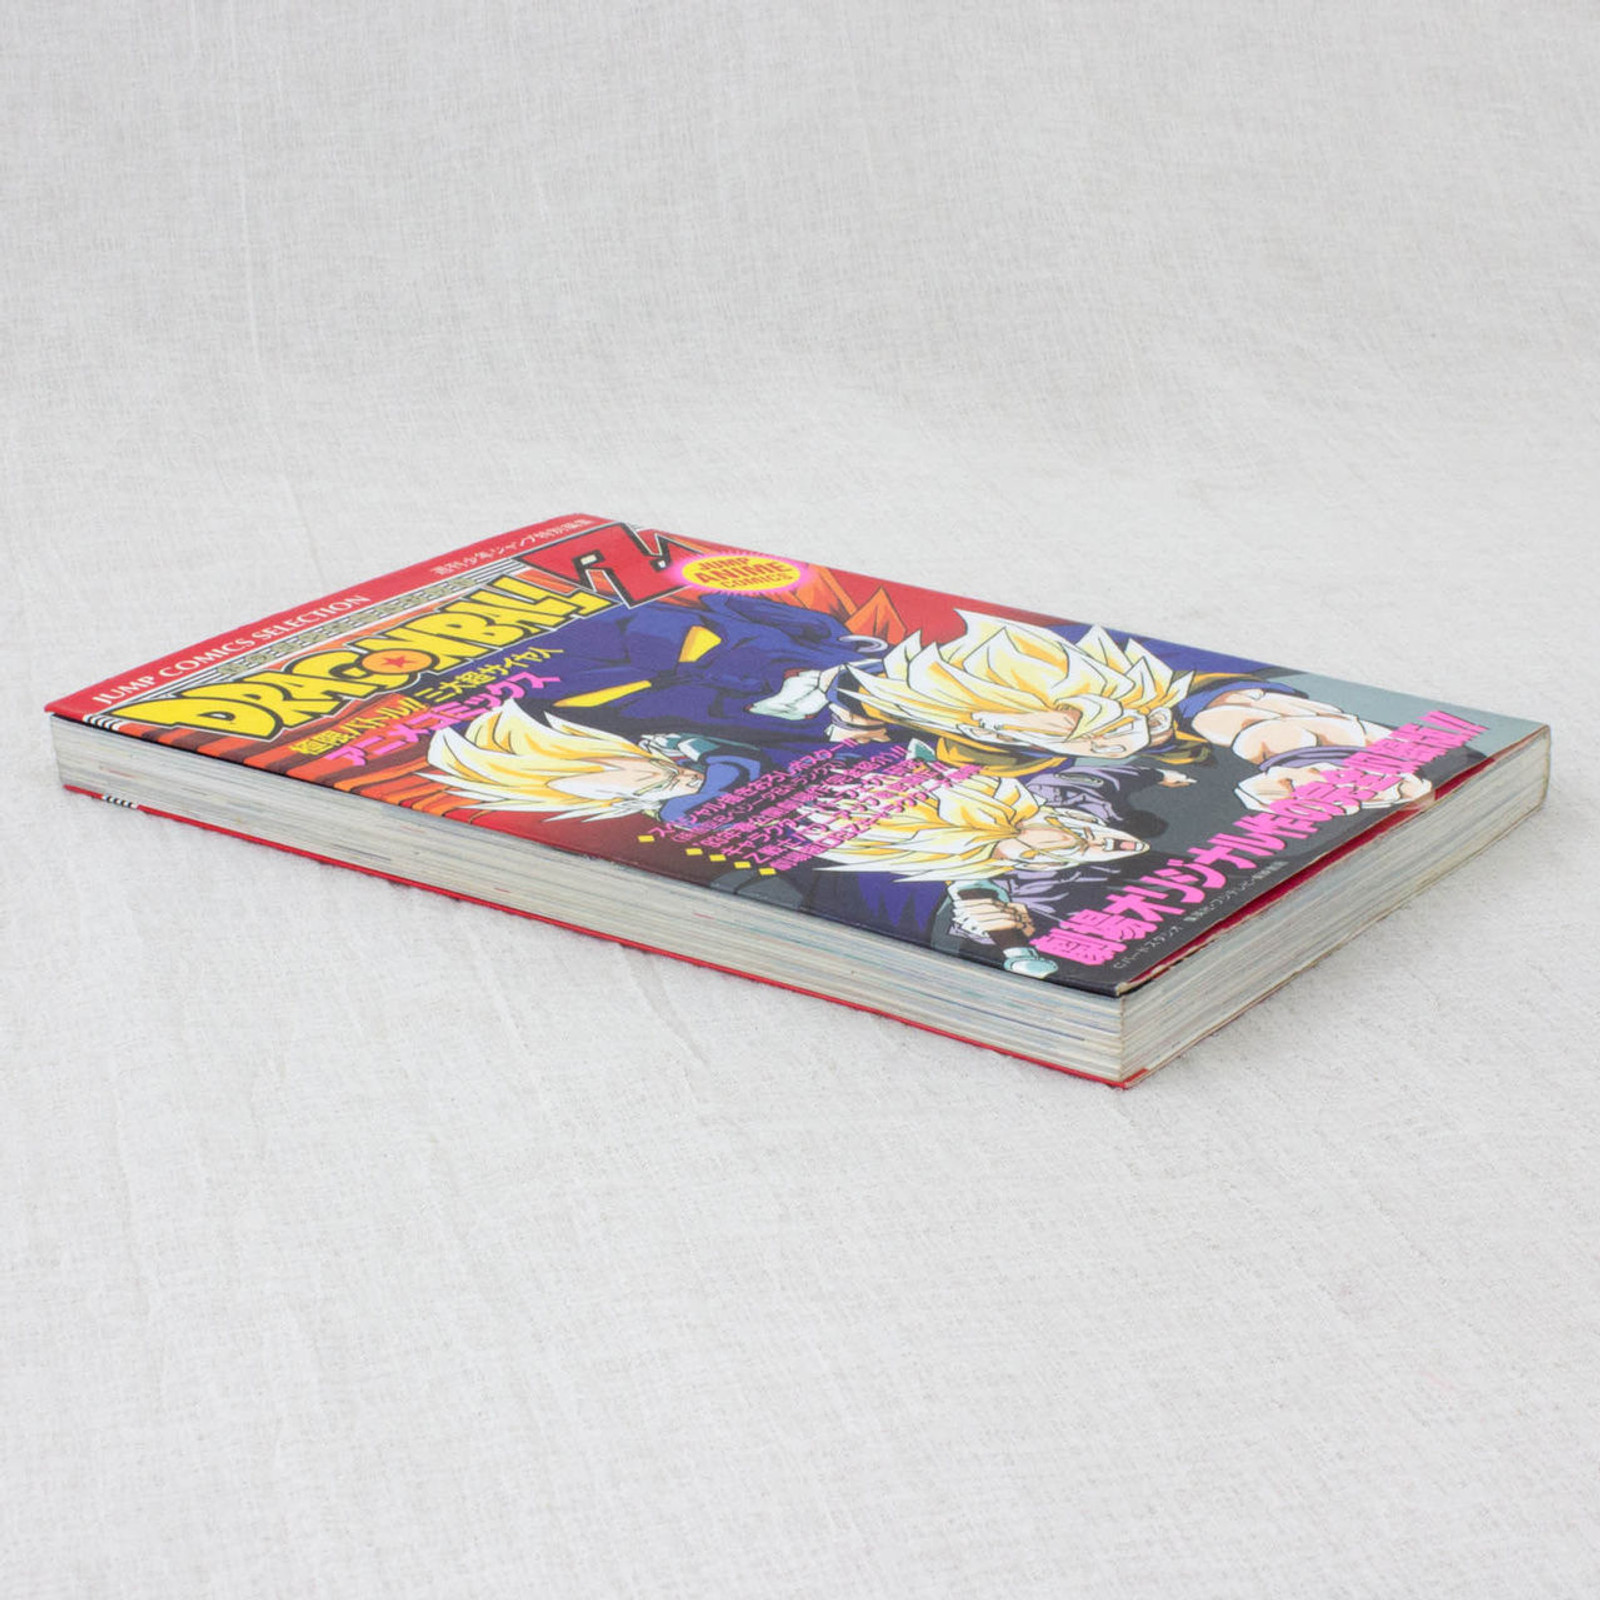 Dragon Ball Z Anime Movie Film Comics Book JAPAN ANIME MANGA 6